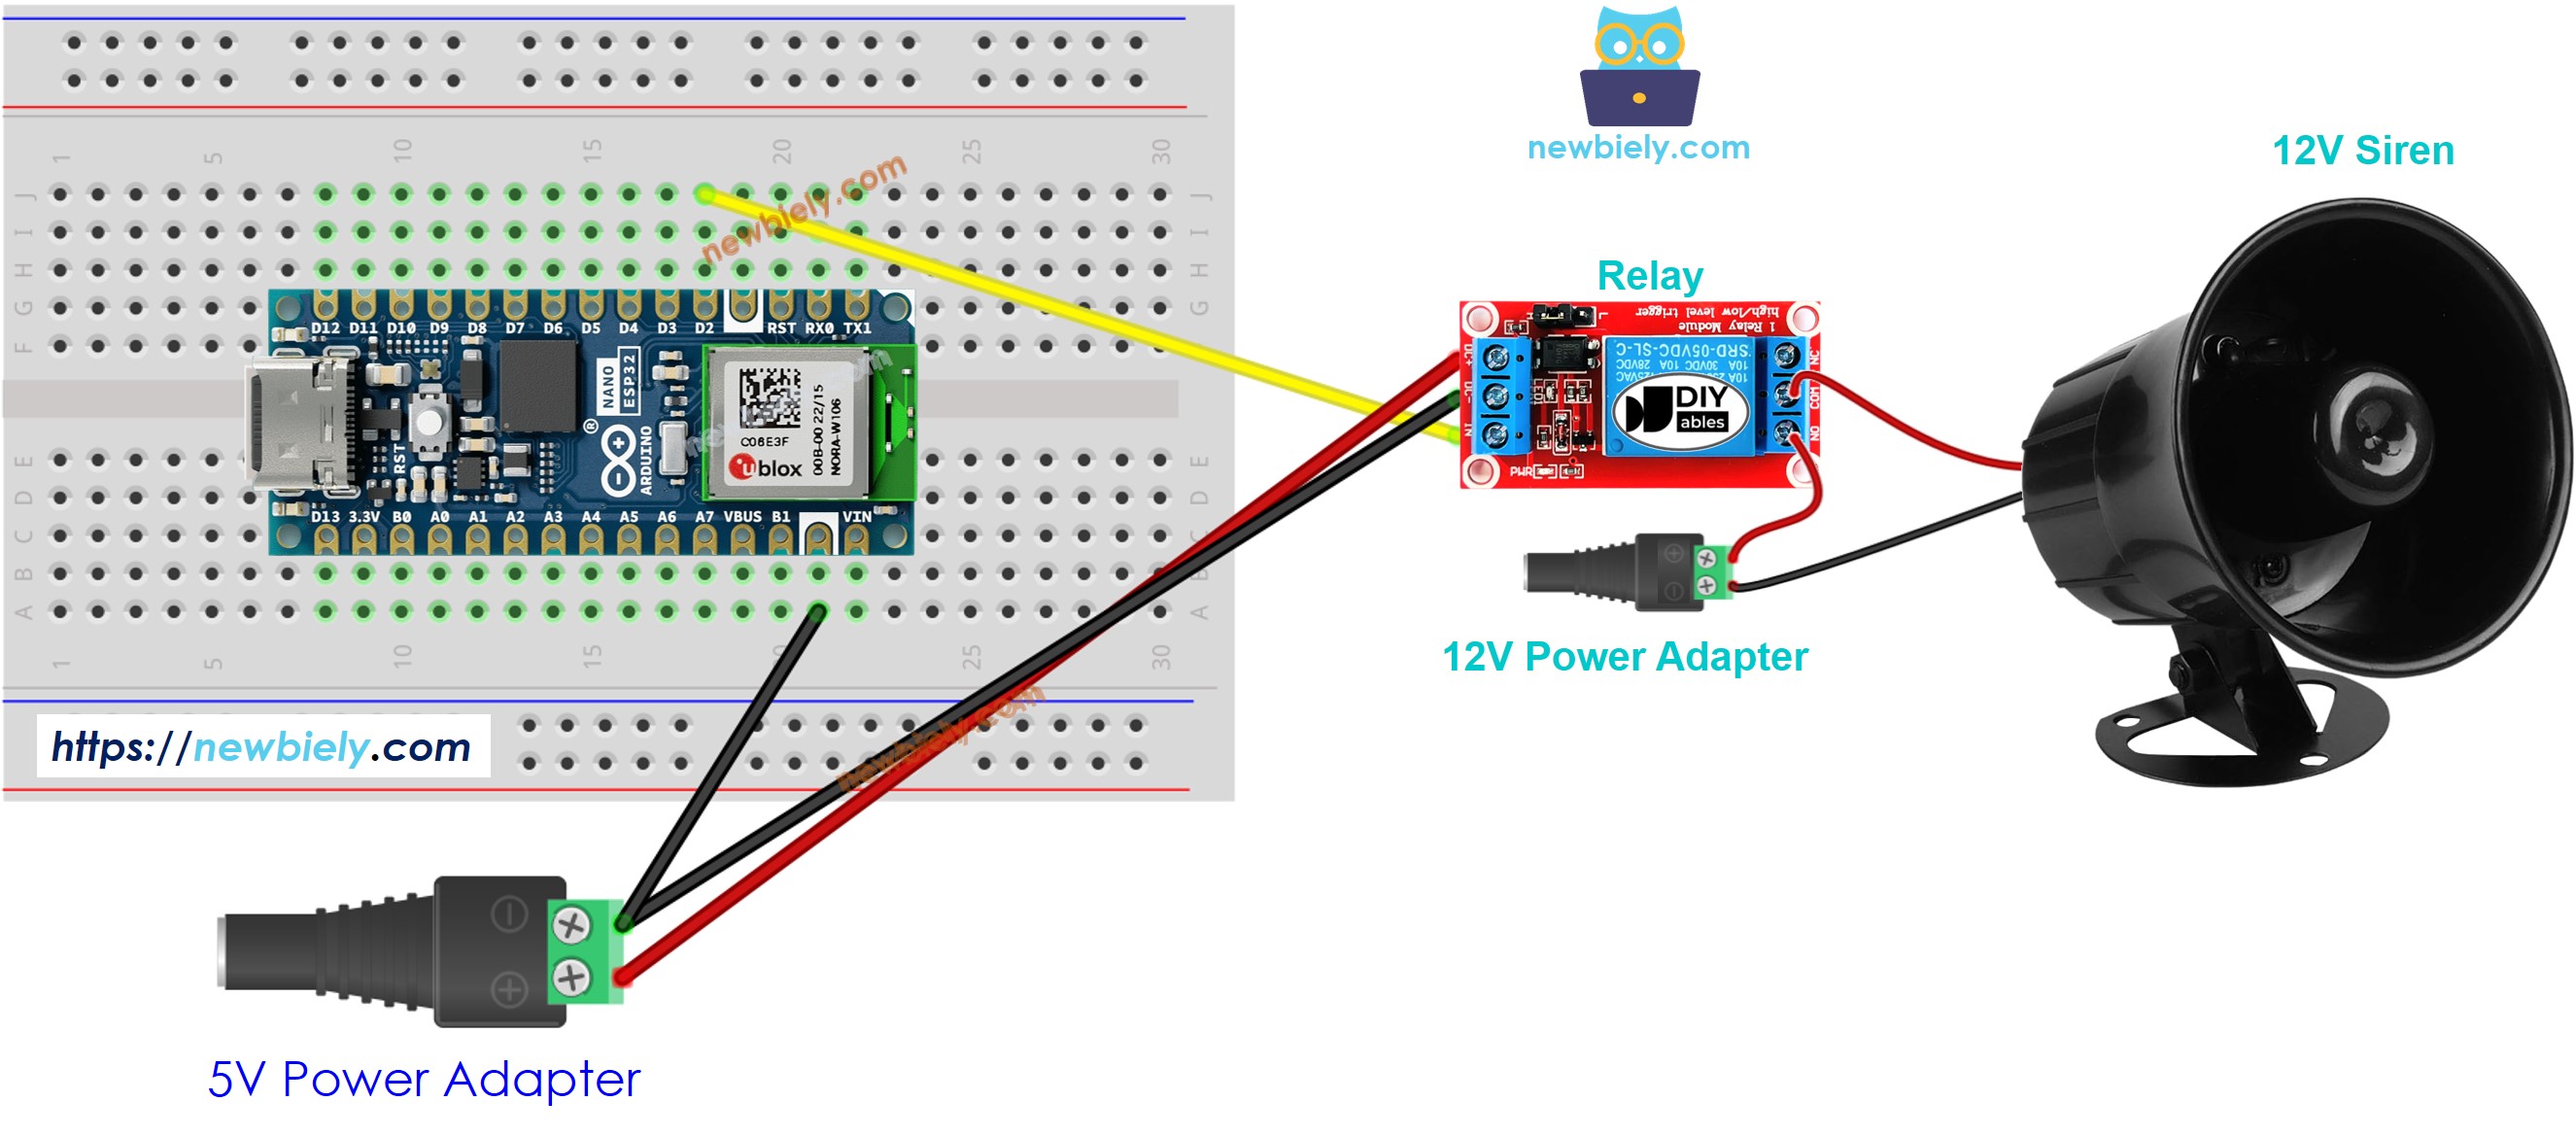 The wiring diagram between Arduino Nano ESP32 and 12V siren